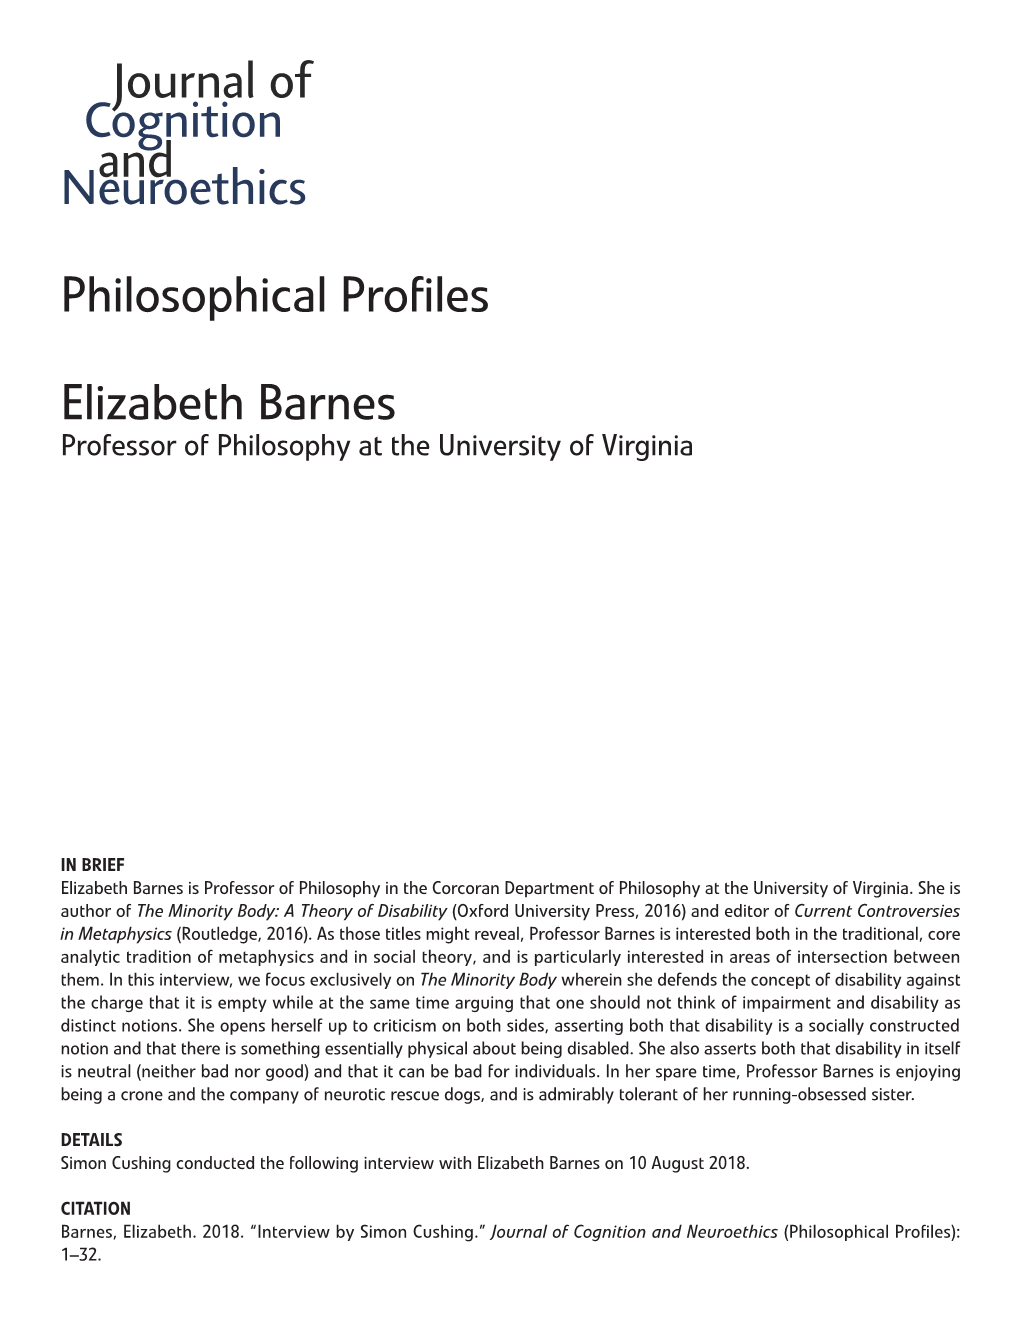 A Philosophical Profile of Elizabeth Barnes